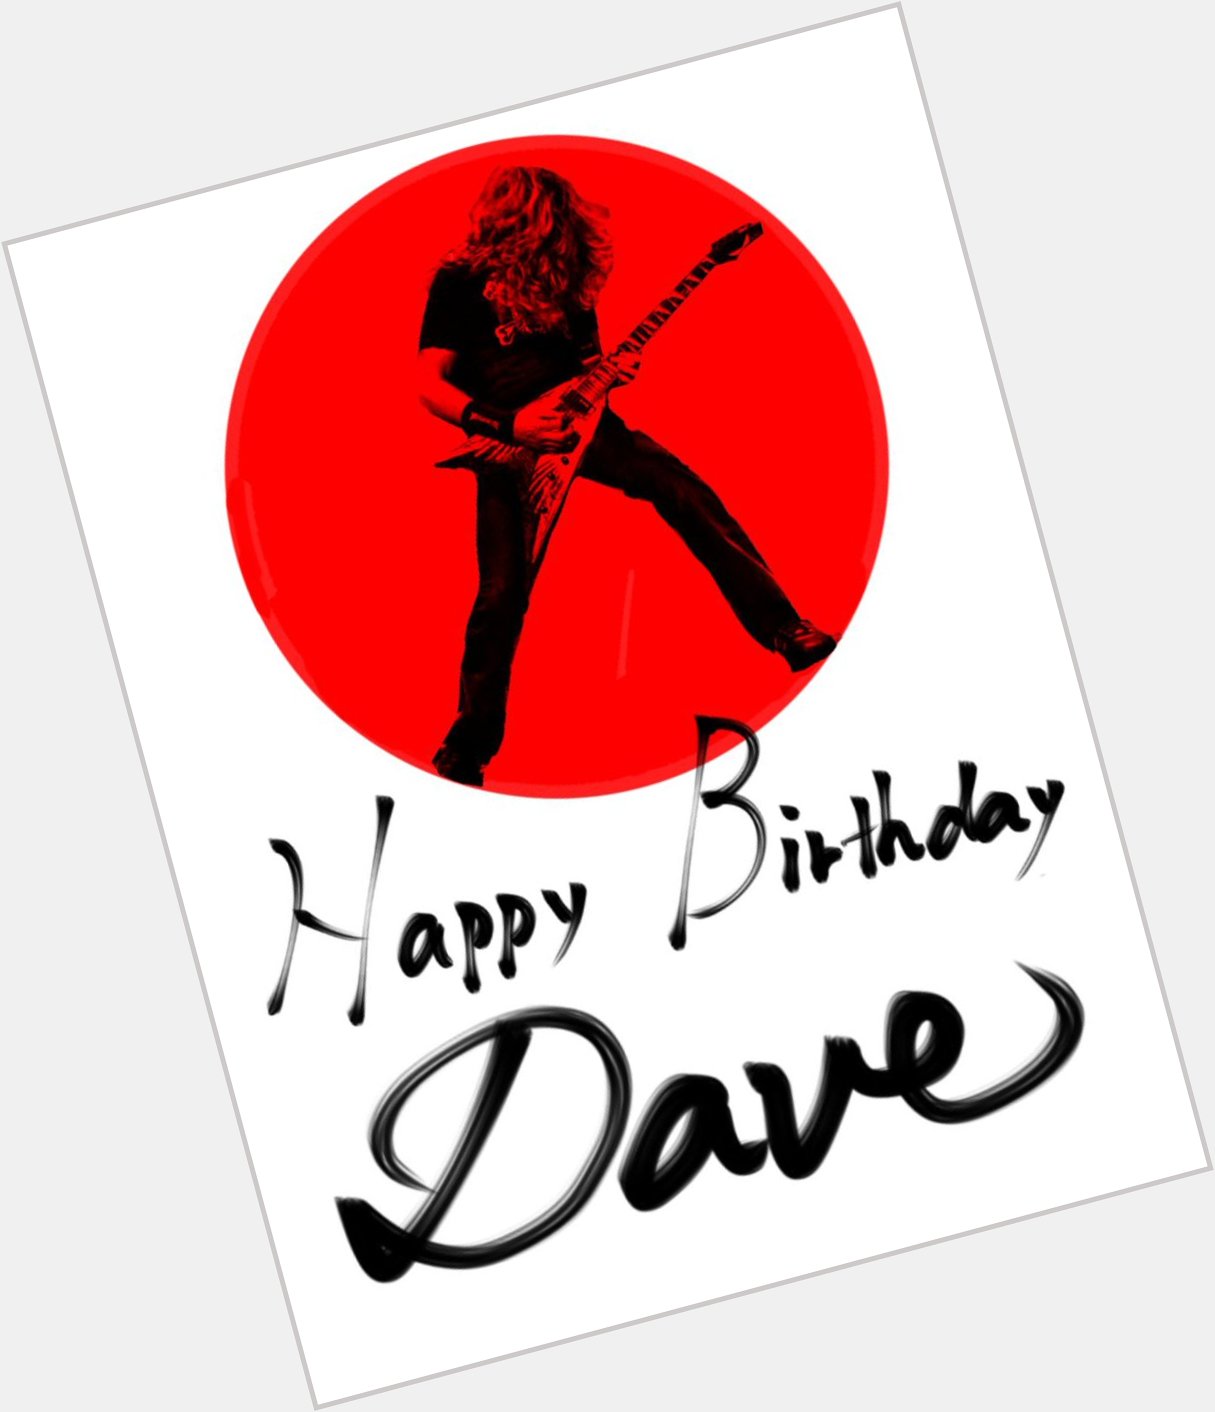 Happy Birthday Dave Mustaine 1                           